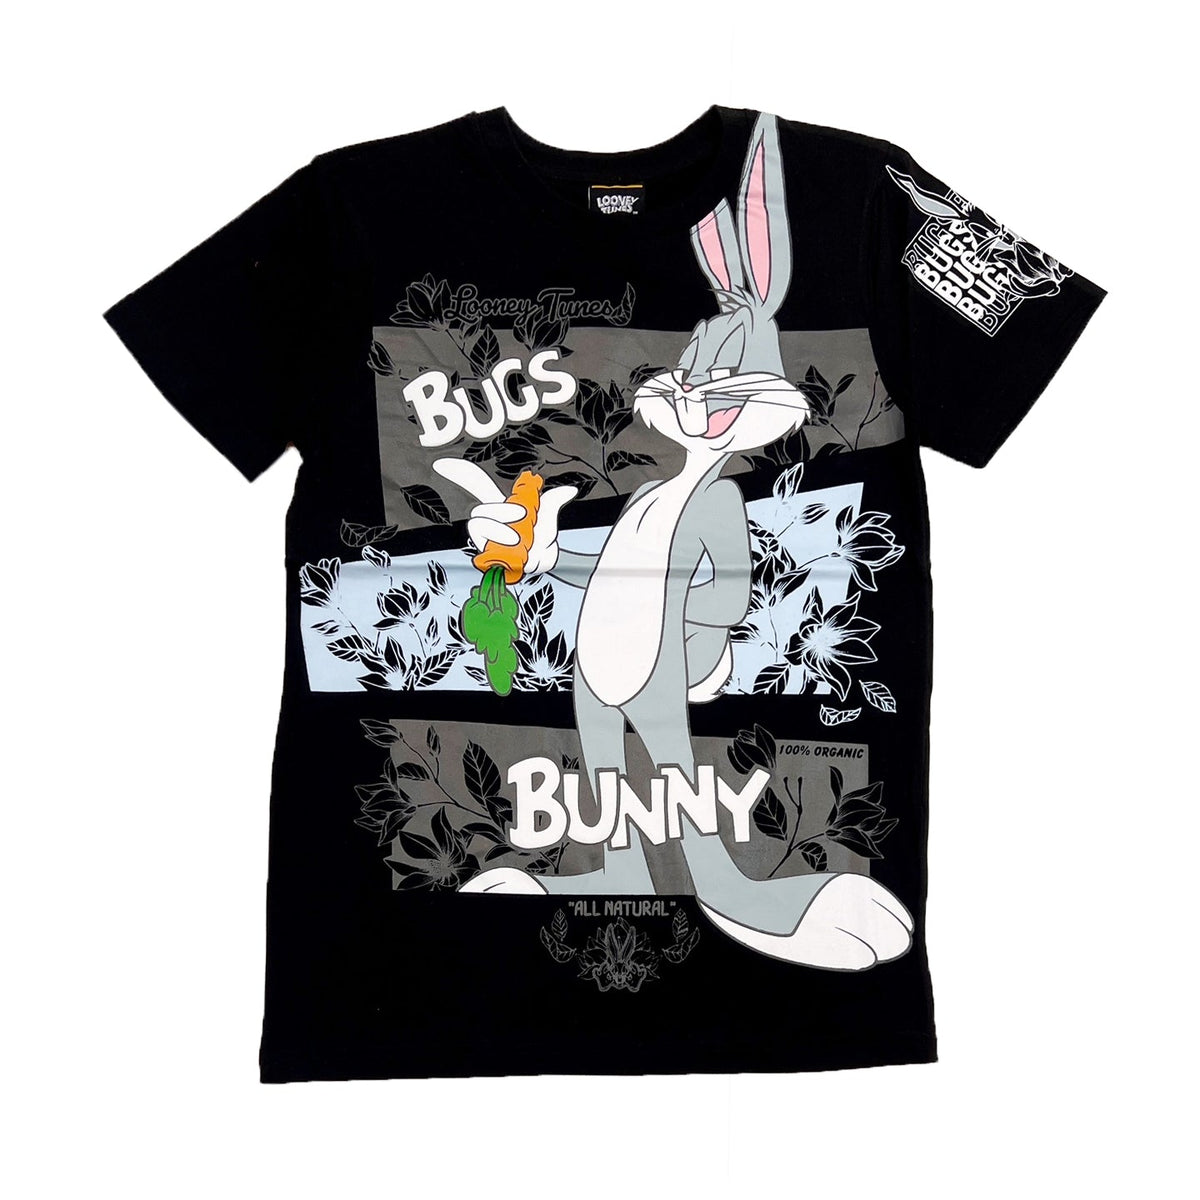 Looney Tunes Bugs Bunny (Black) Tee $16.99 $30 / 2 for